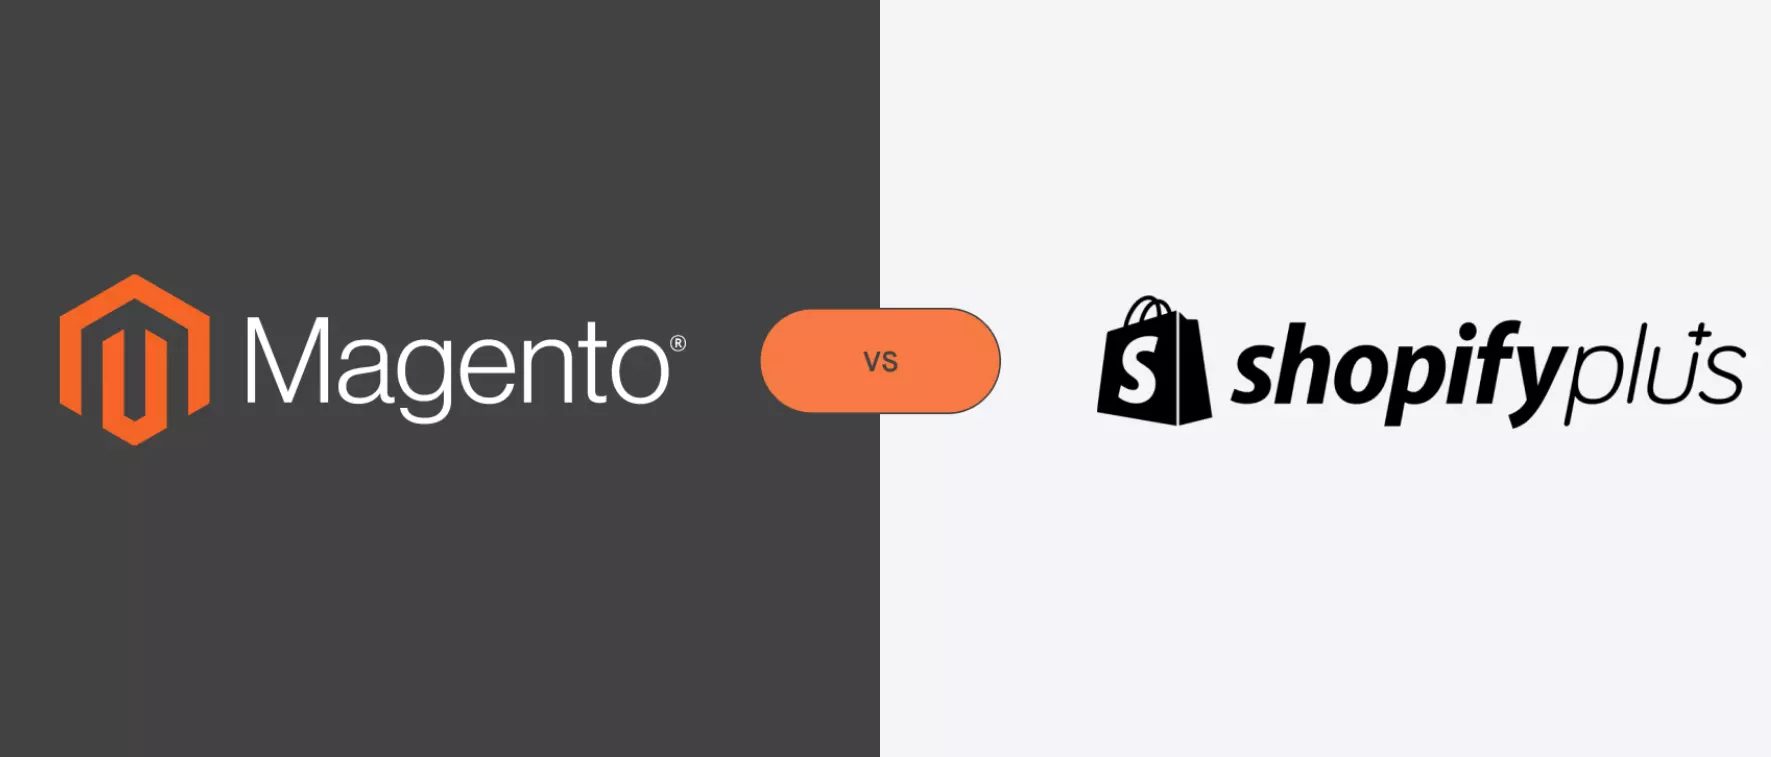 Shopify Plus vs Magento EE